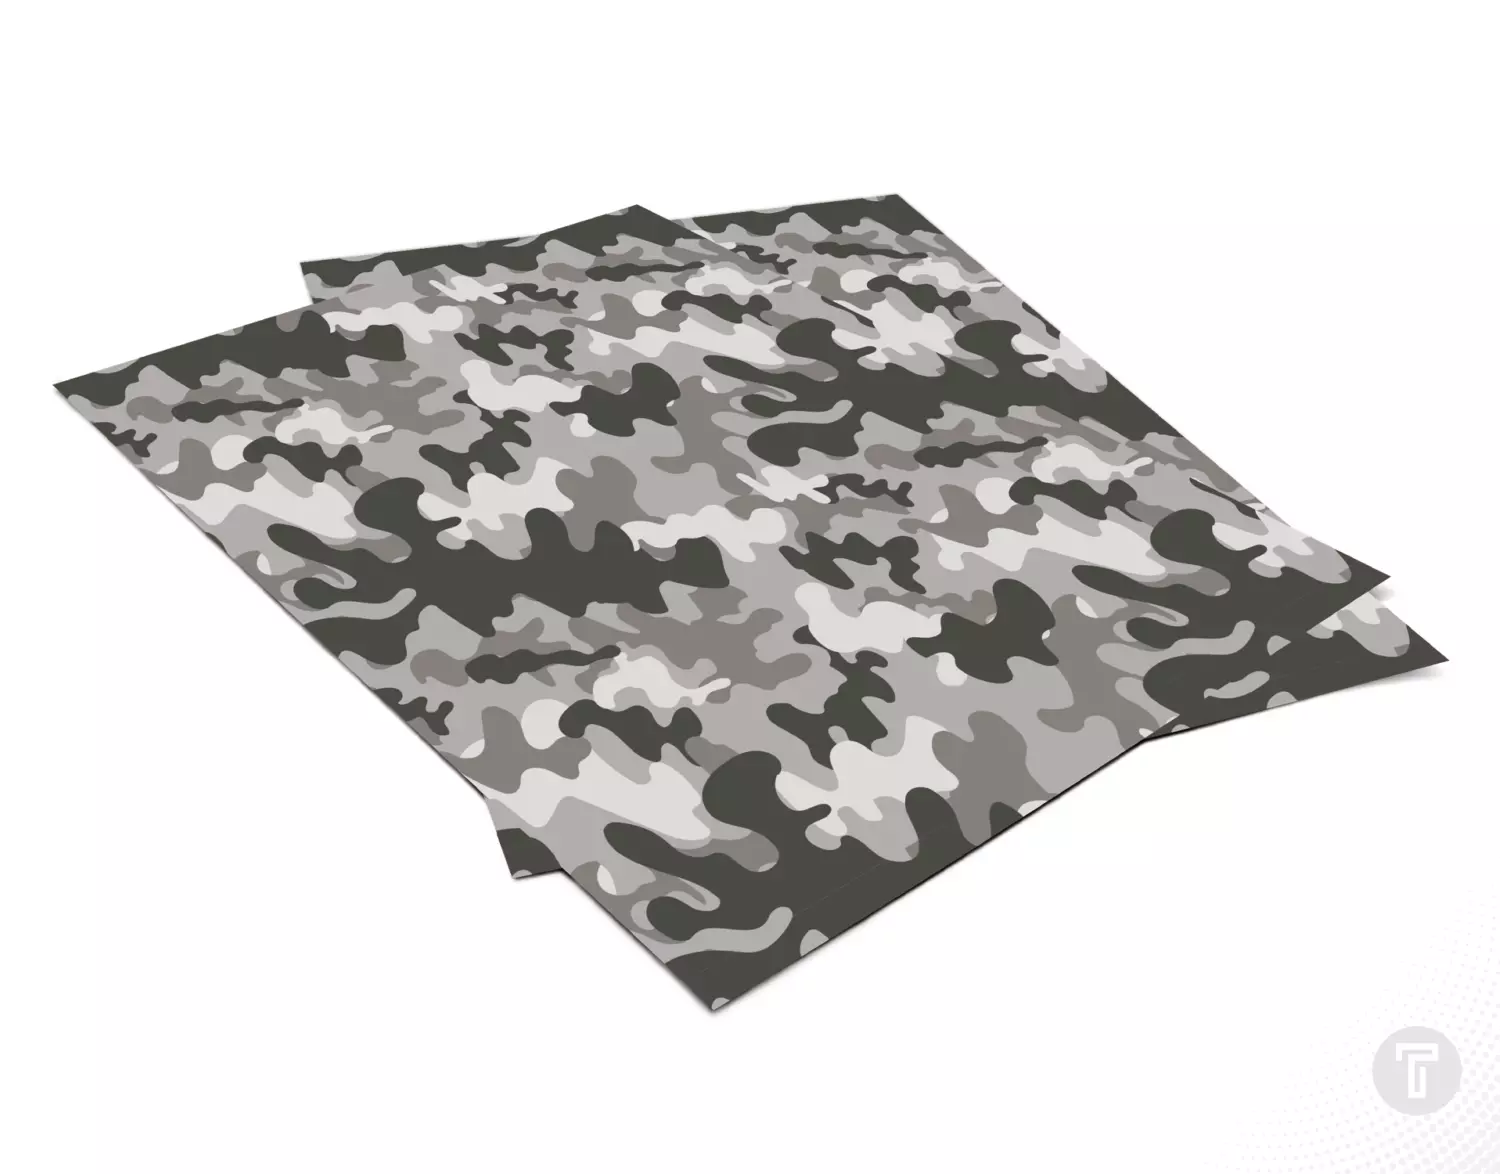 Tps patterns vinyl grey camo